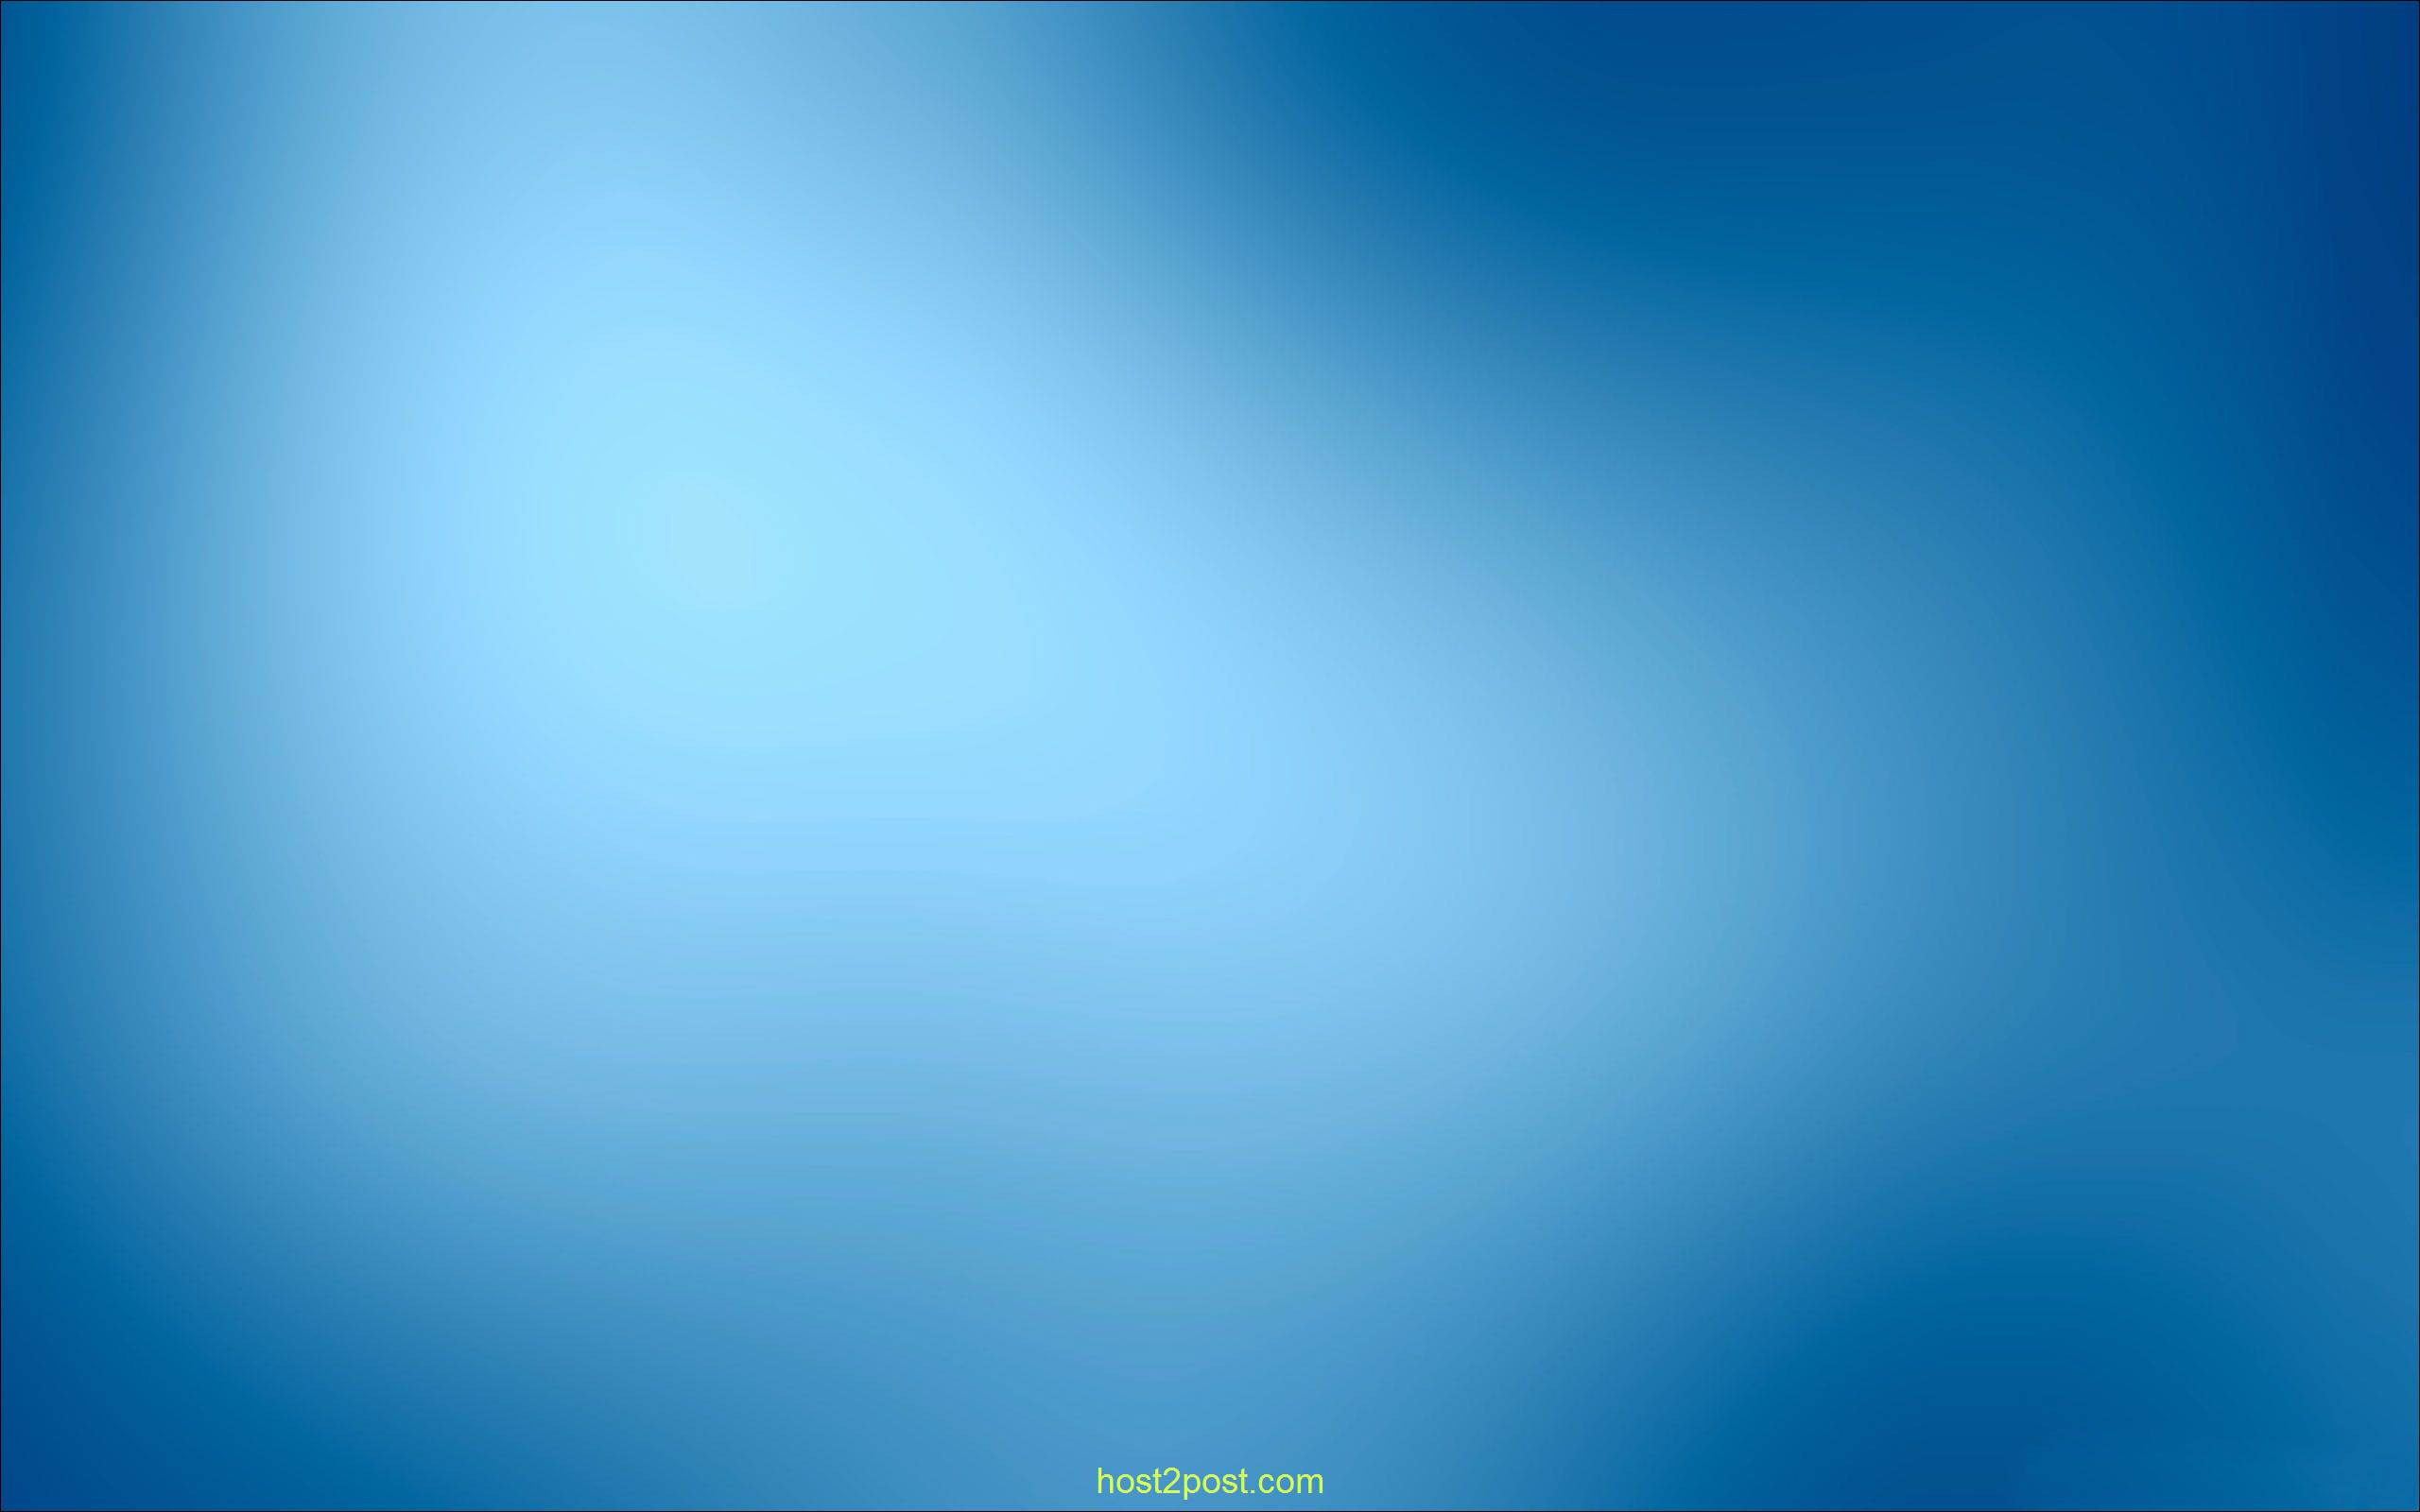 Free Download Best Blue Background Images 5 2560x1600 For Your Desktop Mobile Tablet Explore 77 Blue Background Images Black And Blue Wallpaper Cool Blue Wallpaper